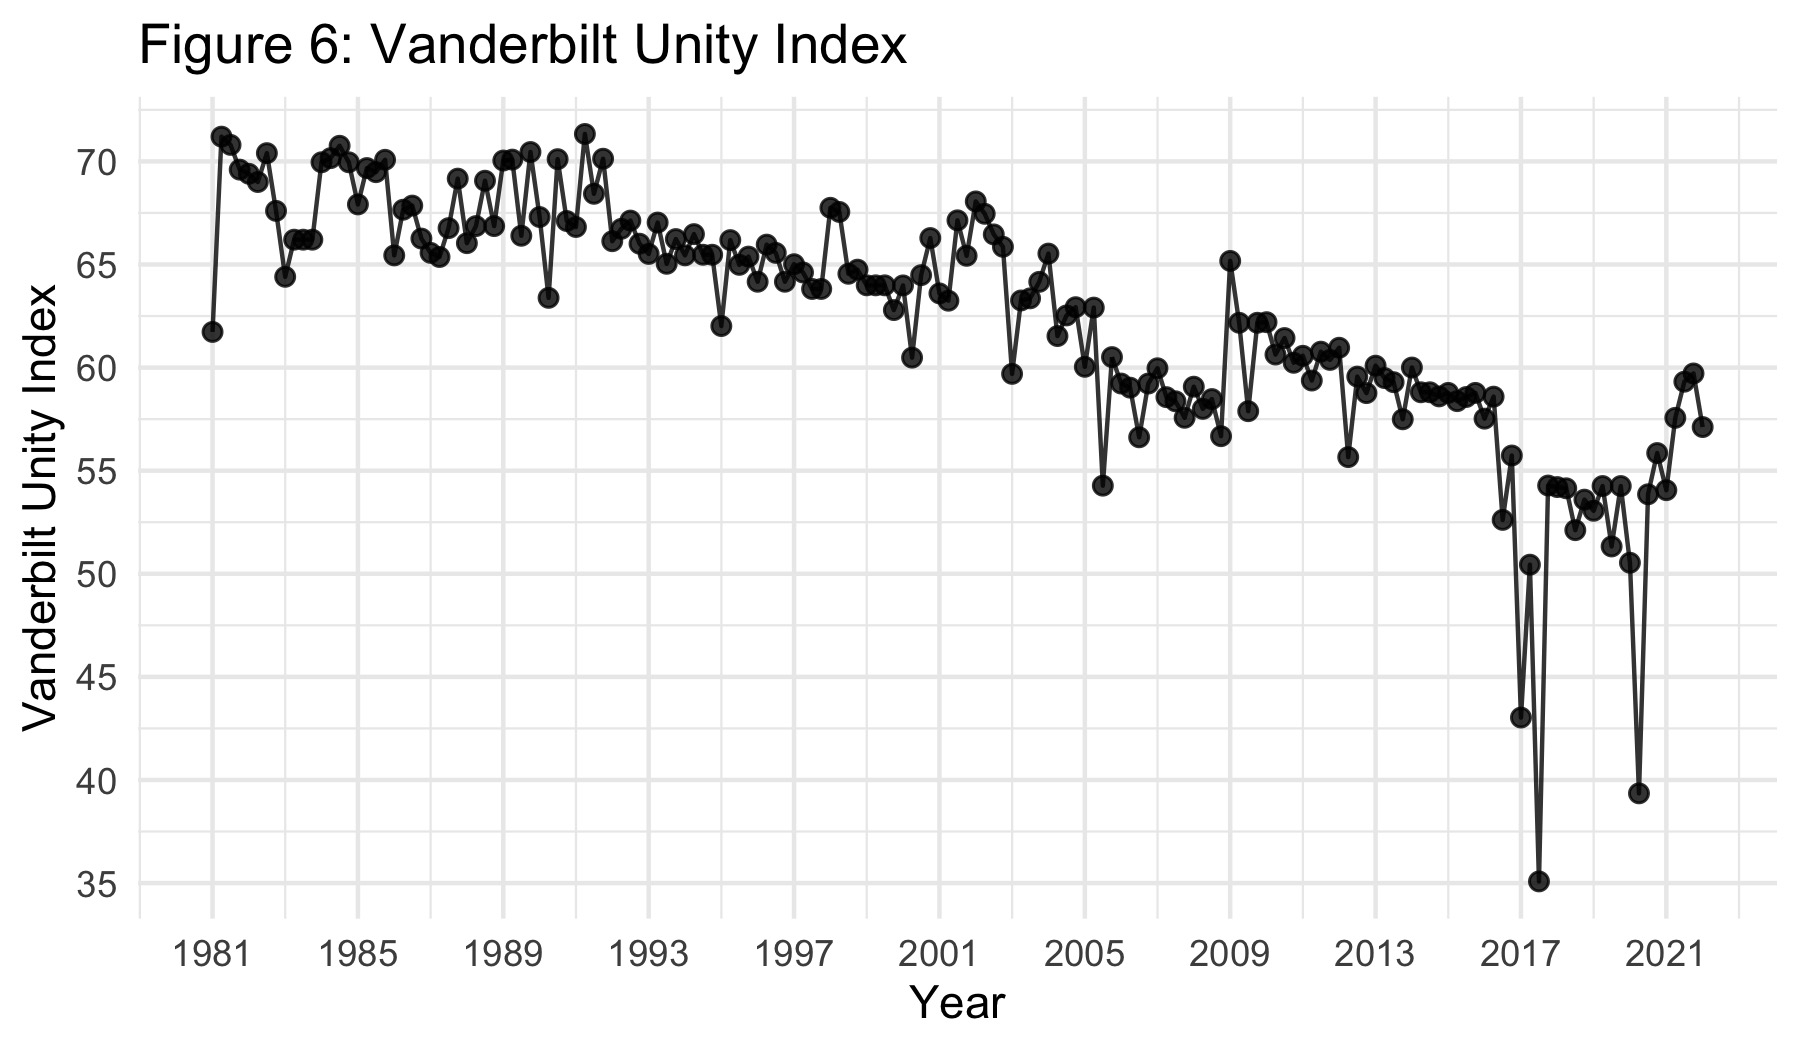 Vanderbilt Unity Project launches “Unity Index” showing quarterly